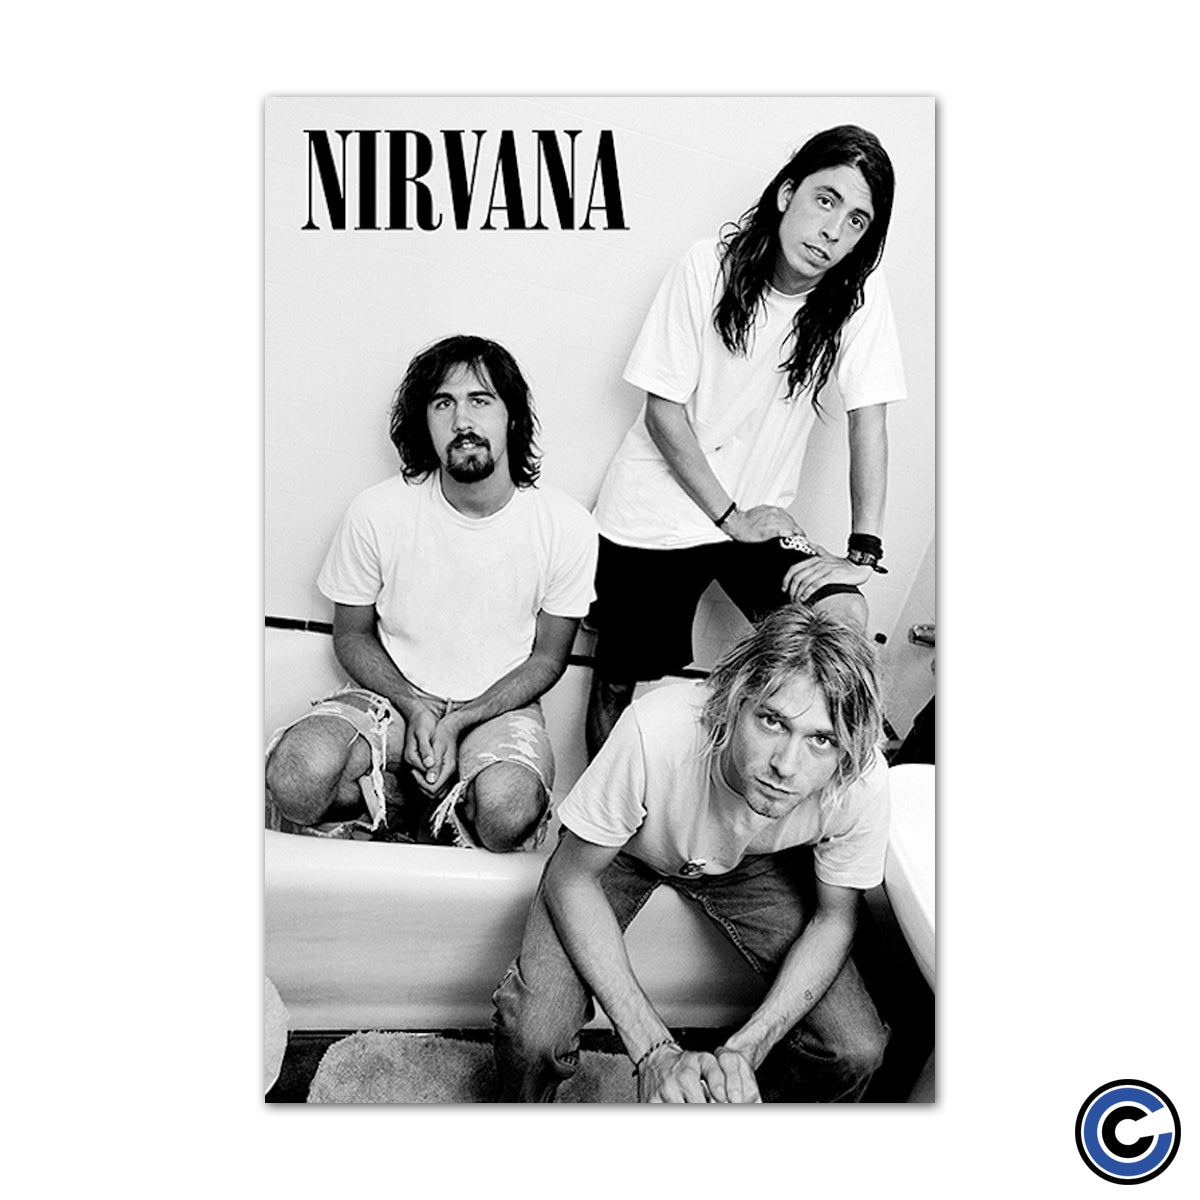 Nirvana "Tub" Poster